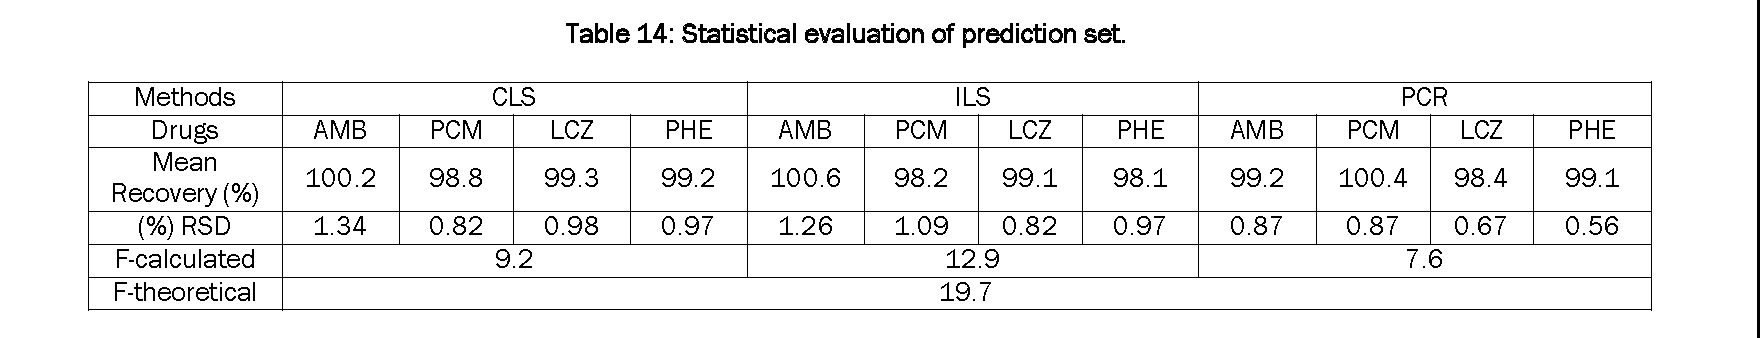 Pharmaceutical-Analysis-Statistical-evaluation-prediction-set